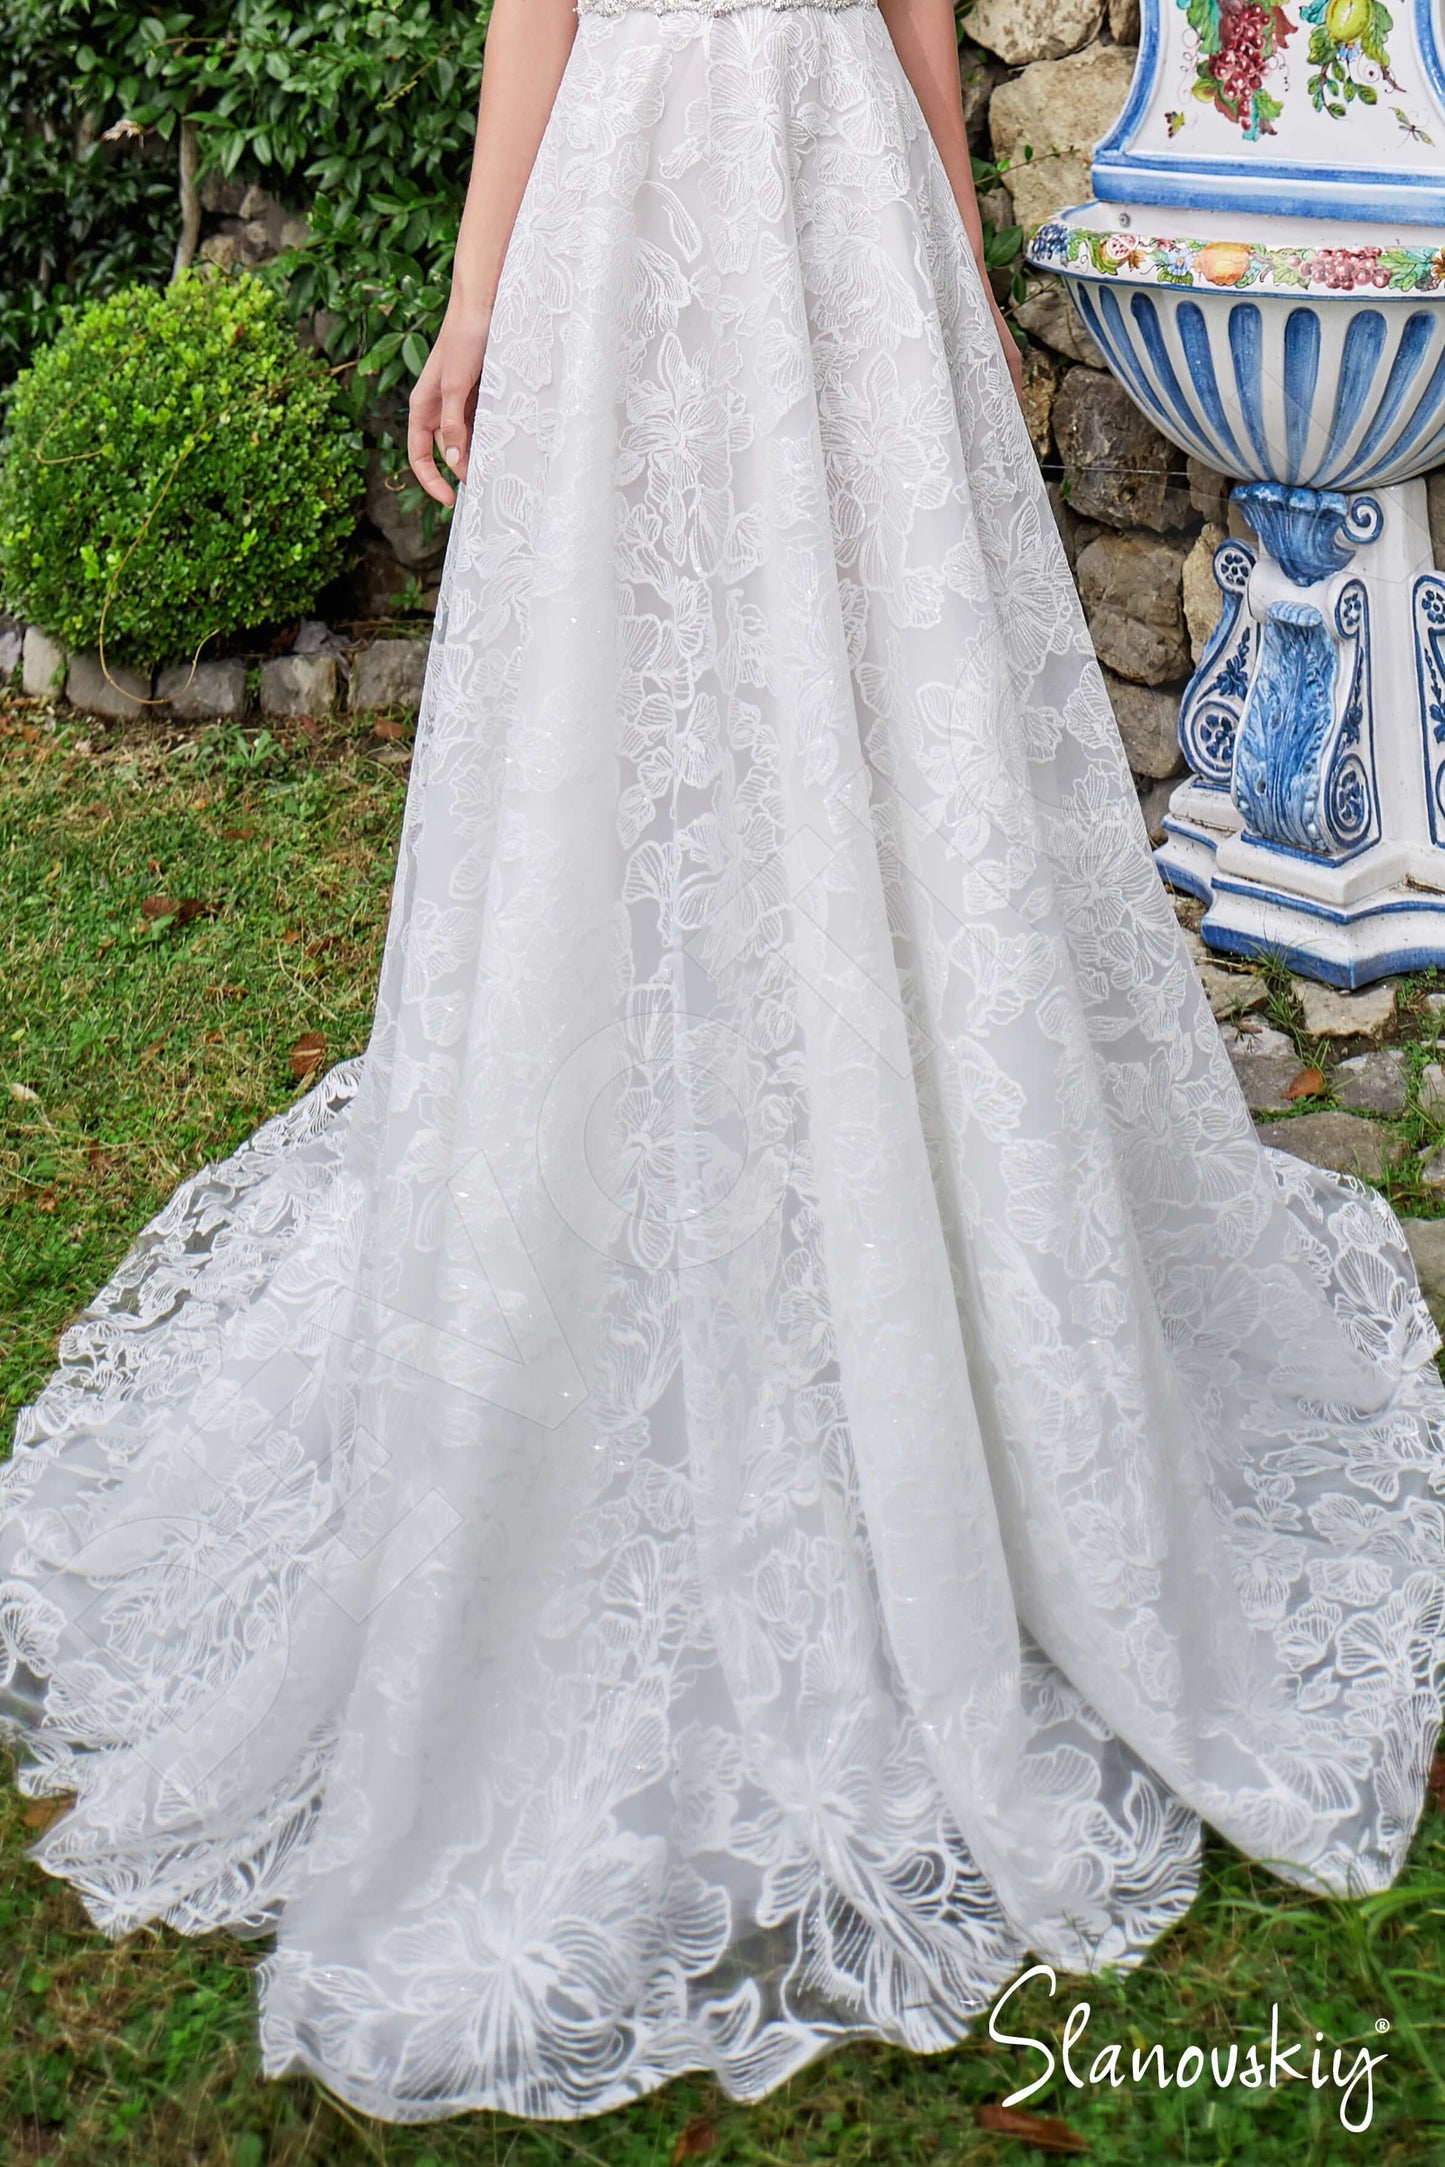 Batilda Open back A-line Sleeveless Wedding Dress 7